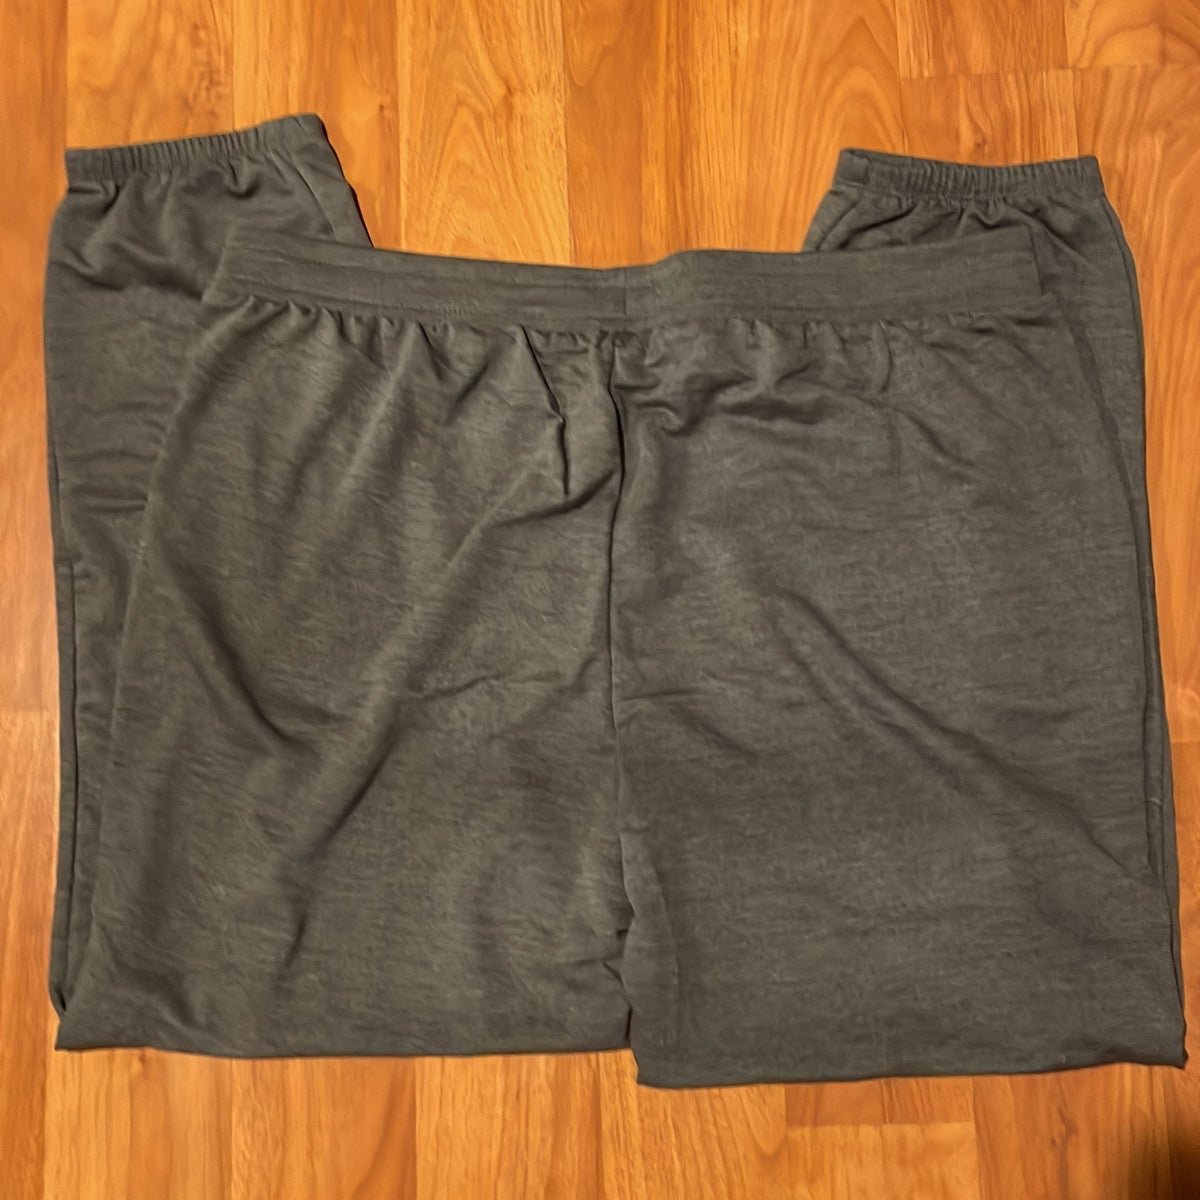 Custom XL Women Sleepwear Pants Mr7HqDbBS Online Shop